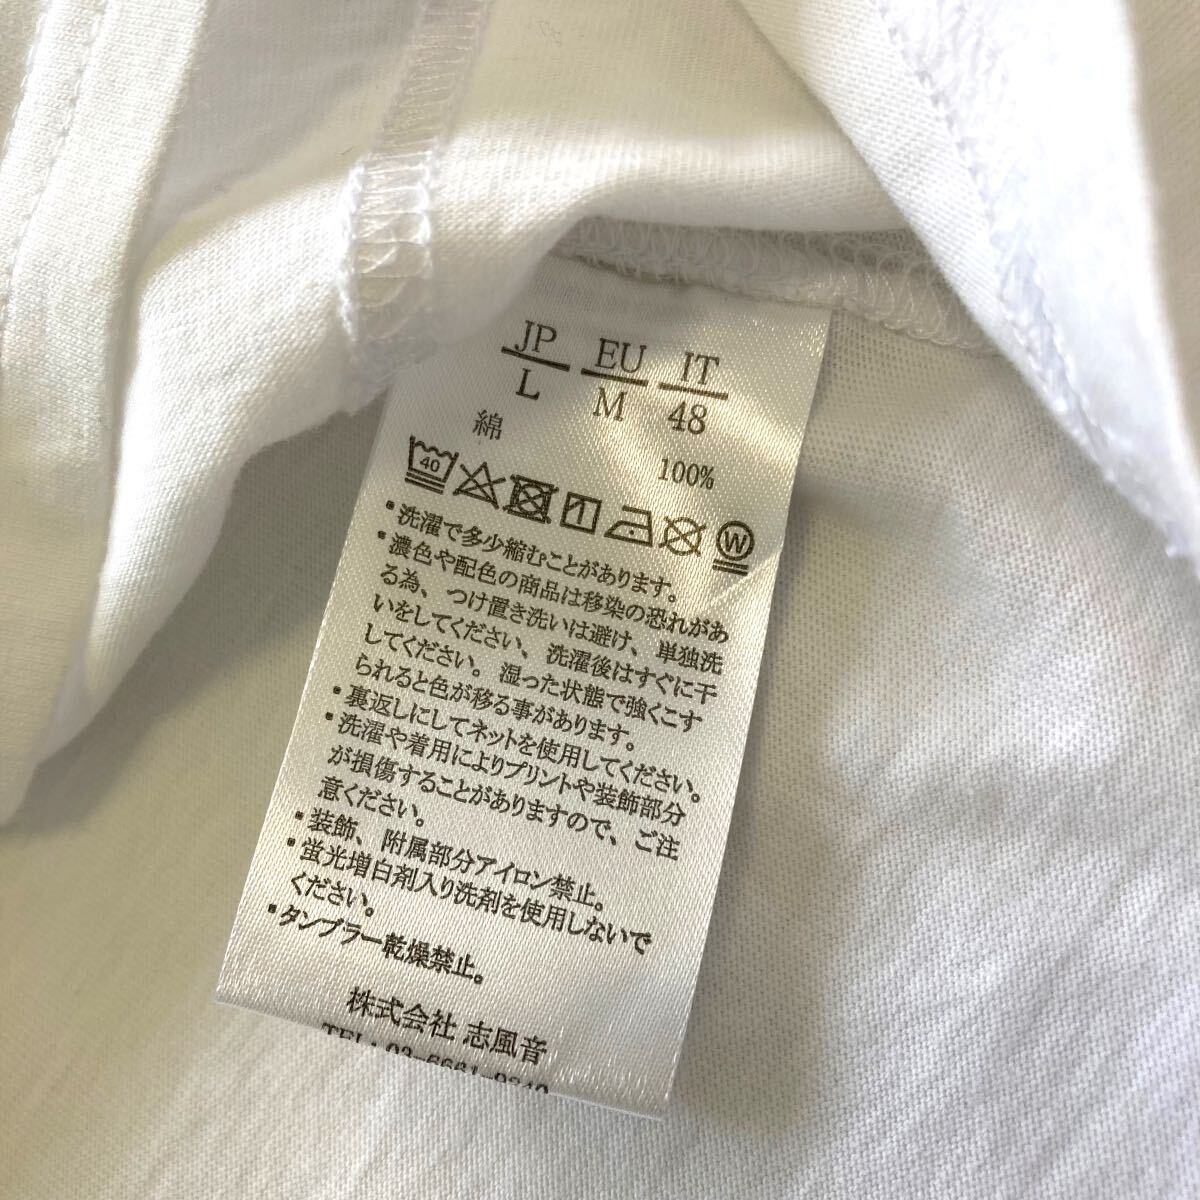 【1PIU1UGUALE3 RELAX】ウノピュウノウグァーレトレリラックス ストーンロゴ 半袖Tシャツ tシャツ ワンポイント刺繍ロゴ 白 ホワイト (L)_画像6